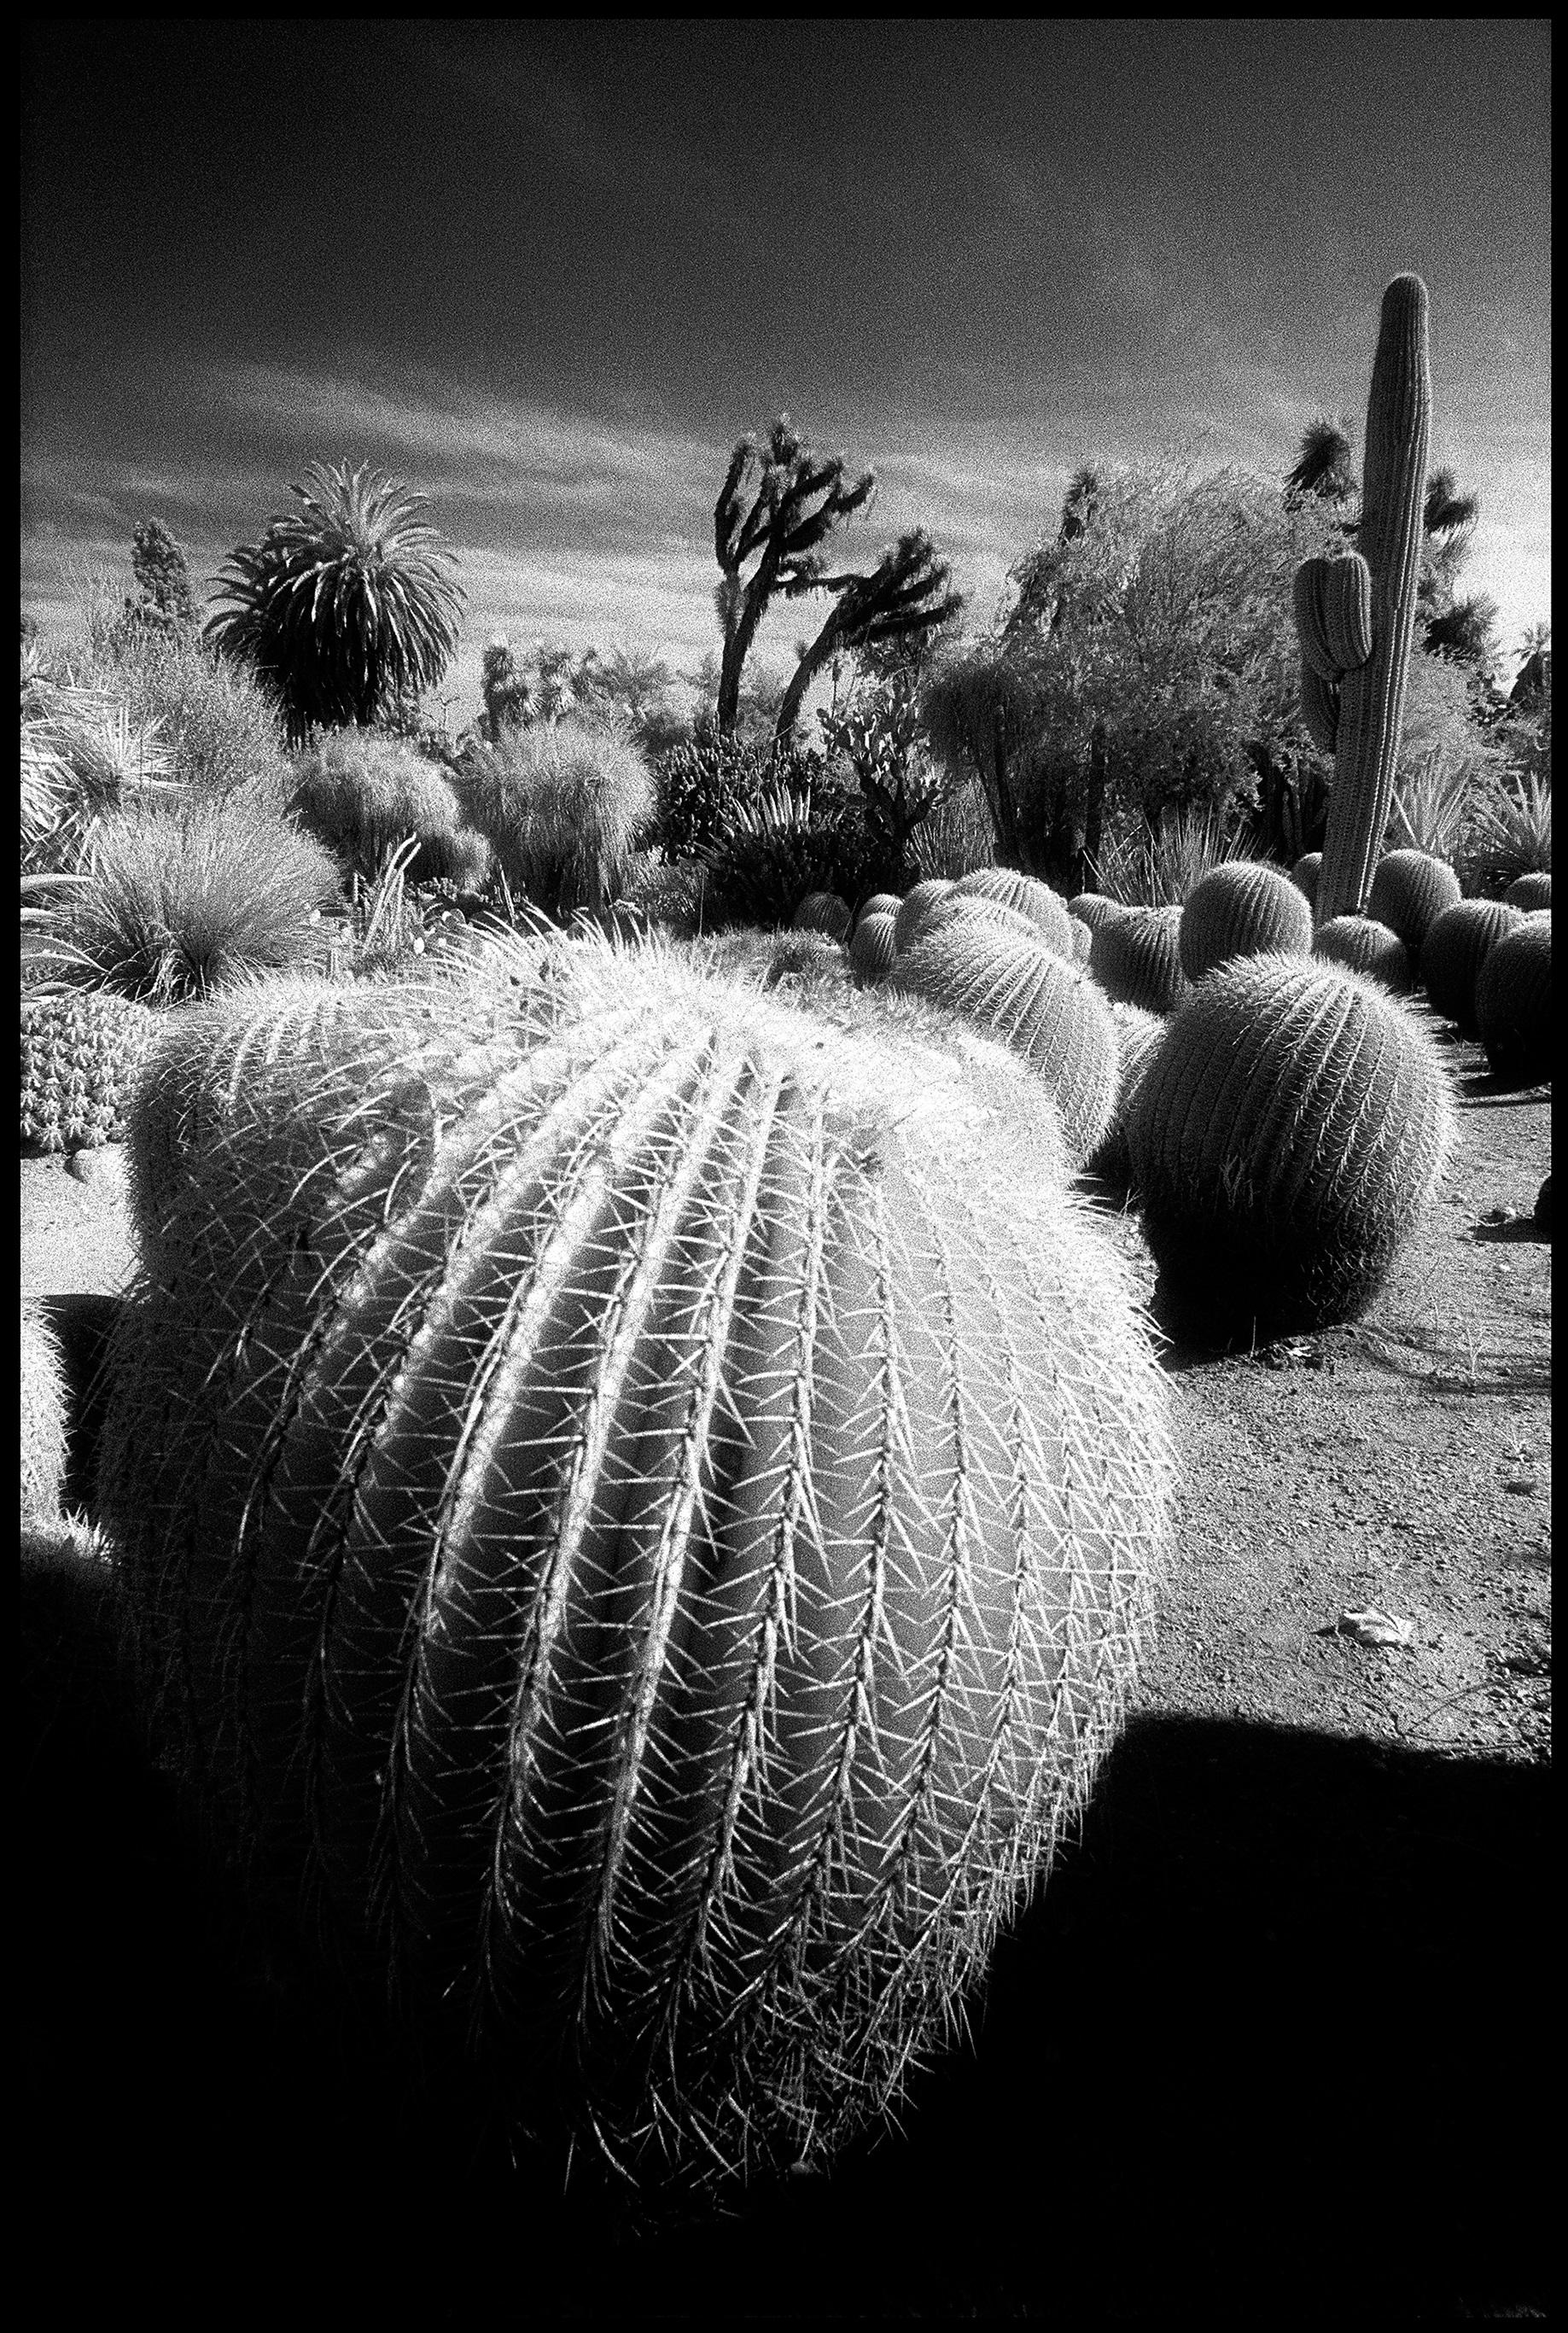 Edward Alfano Black and White Photograph - Cactus Garden at Huntington Gardens - Contemporary Surreal Landscape Photograph 